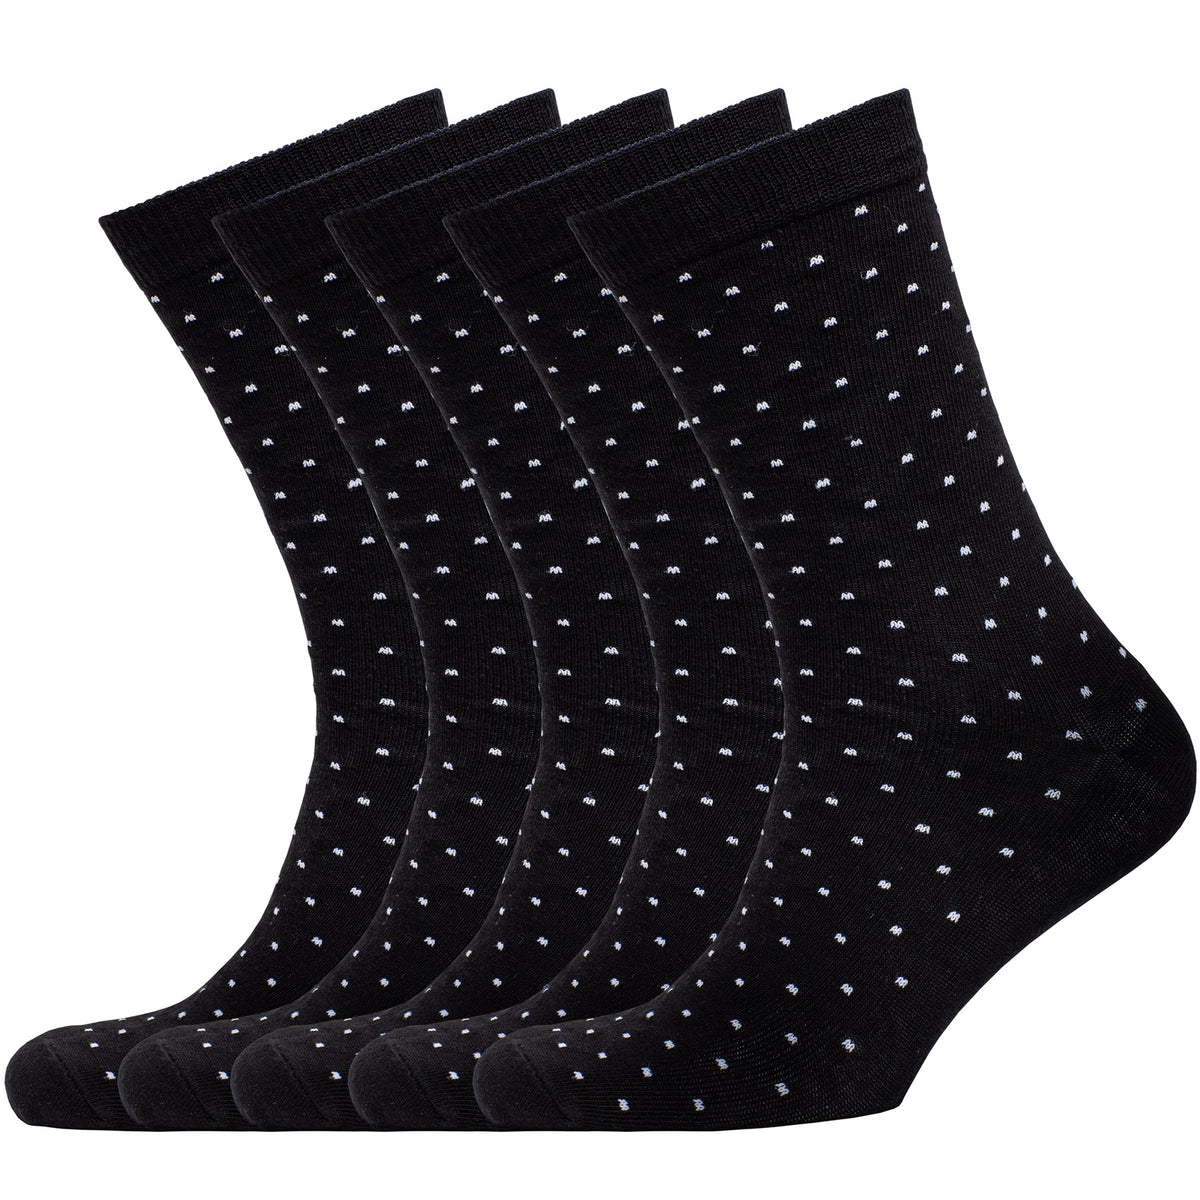 NUDUS Men’s Cotton Polka Dot Dress Socks 5-Pair Gift Box